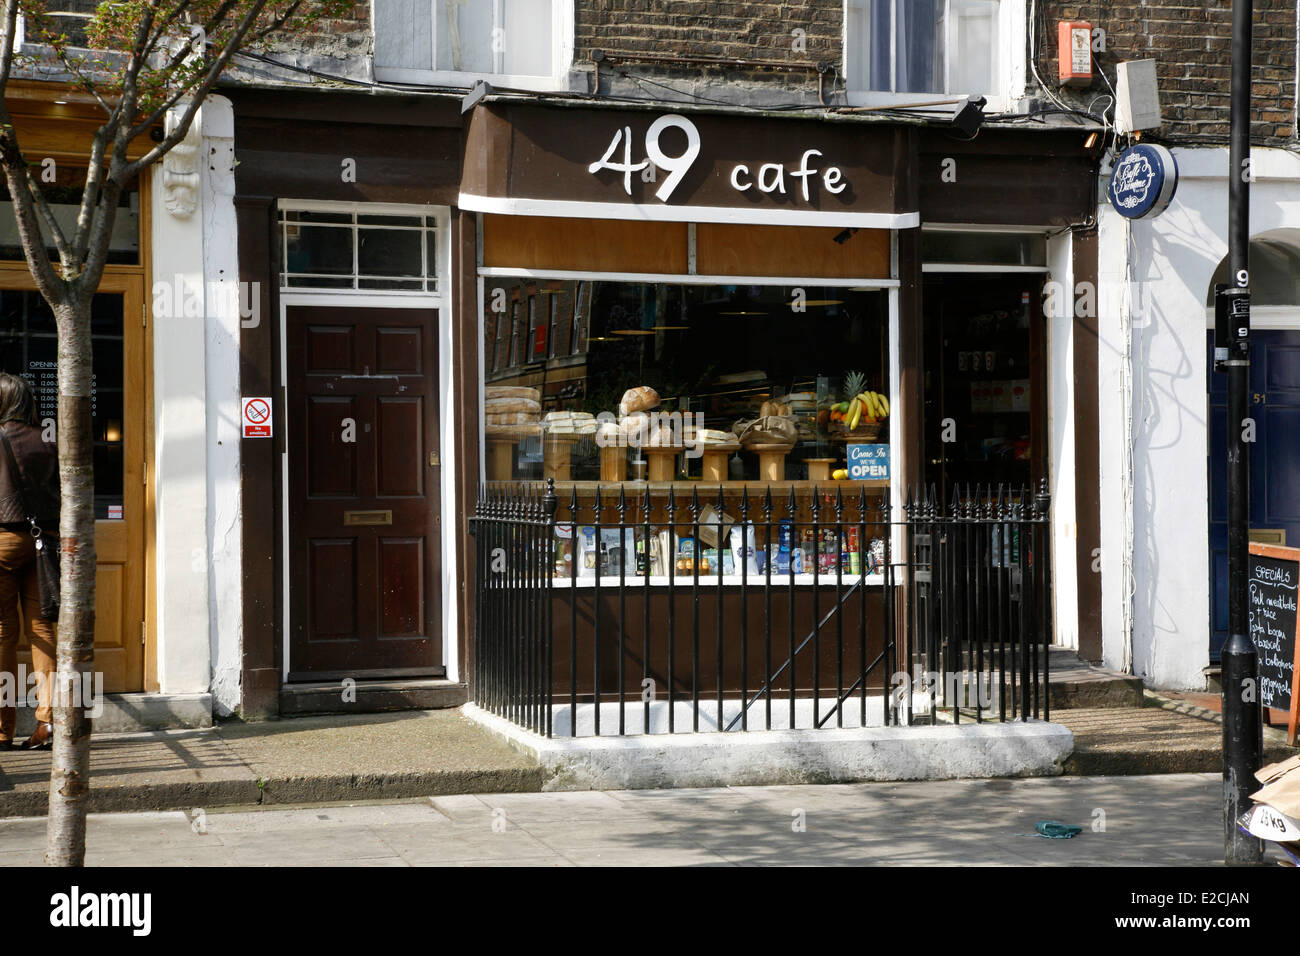 49 Cafe on Marchmont Street, Bloomsbury, London, UK Stock Photo